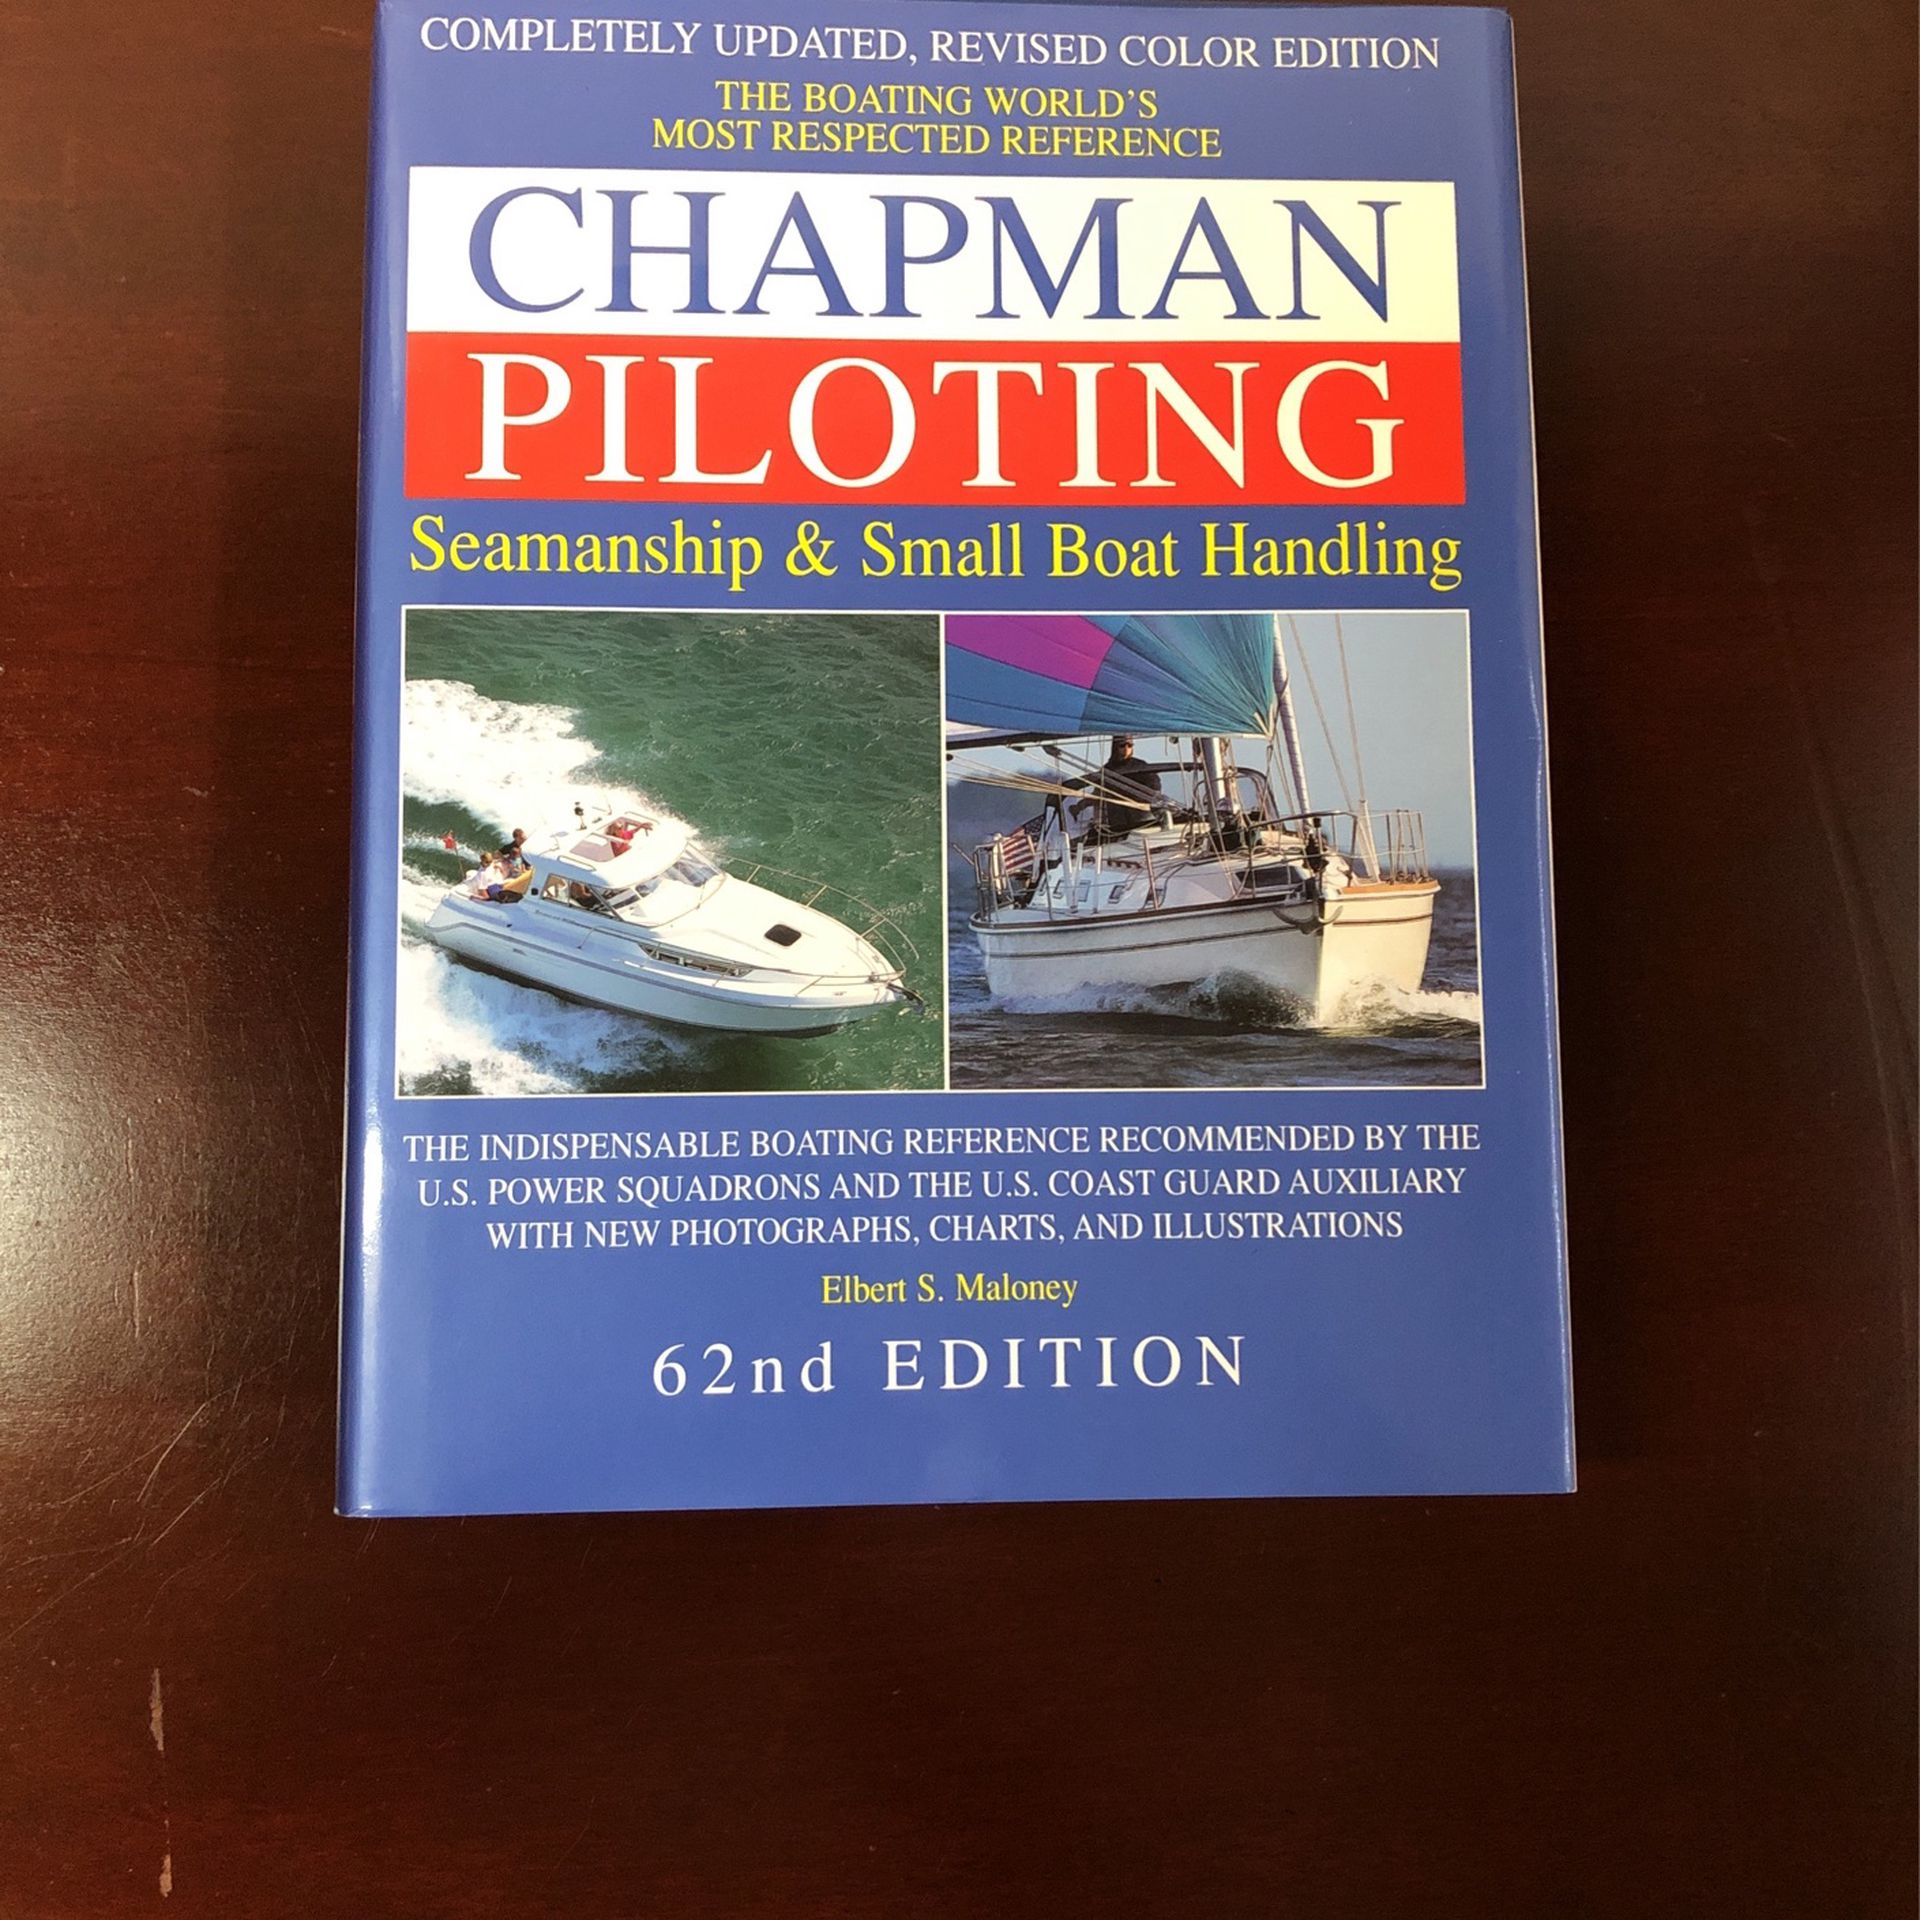 Chapman Piloting